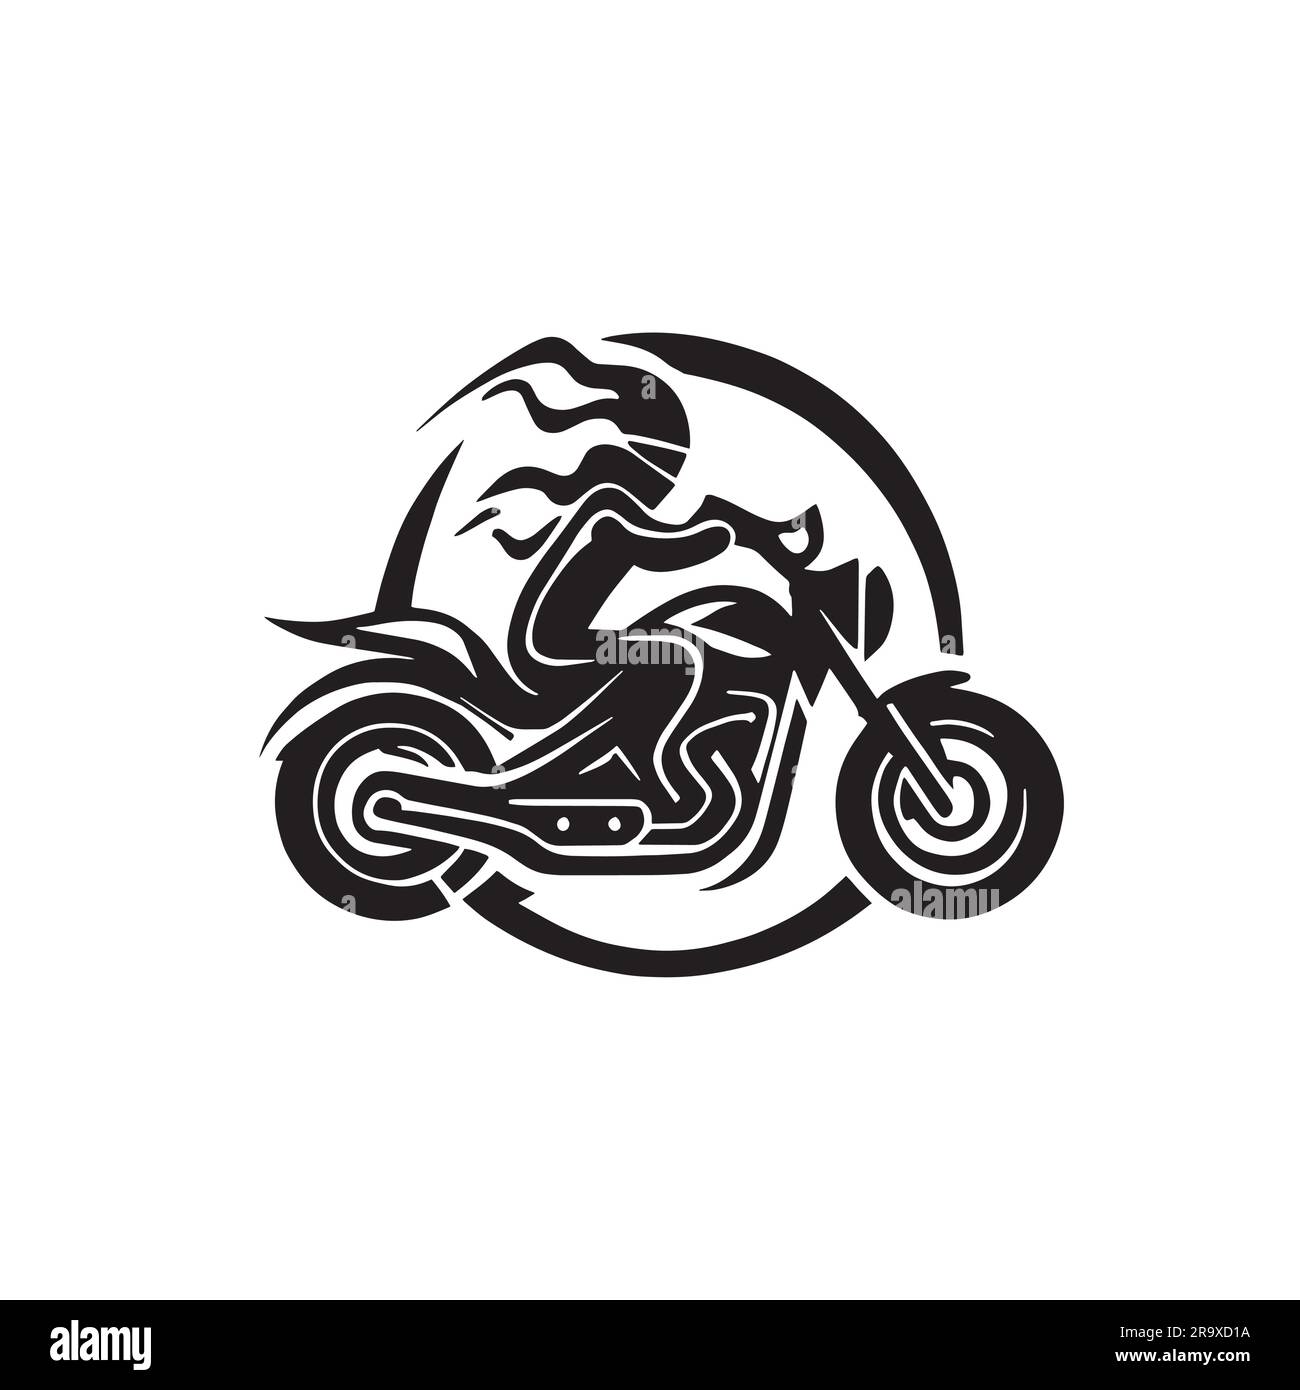 biker logo illustration driving motorcycle in black color Stock Vector